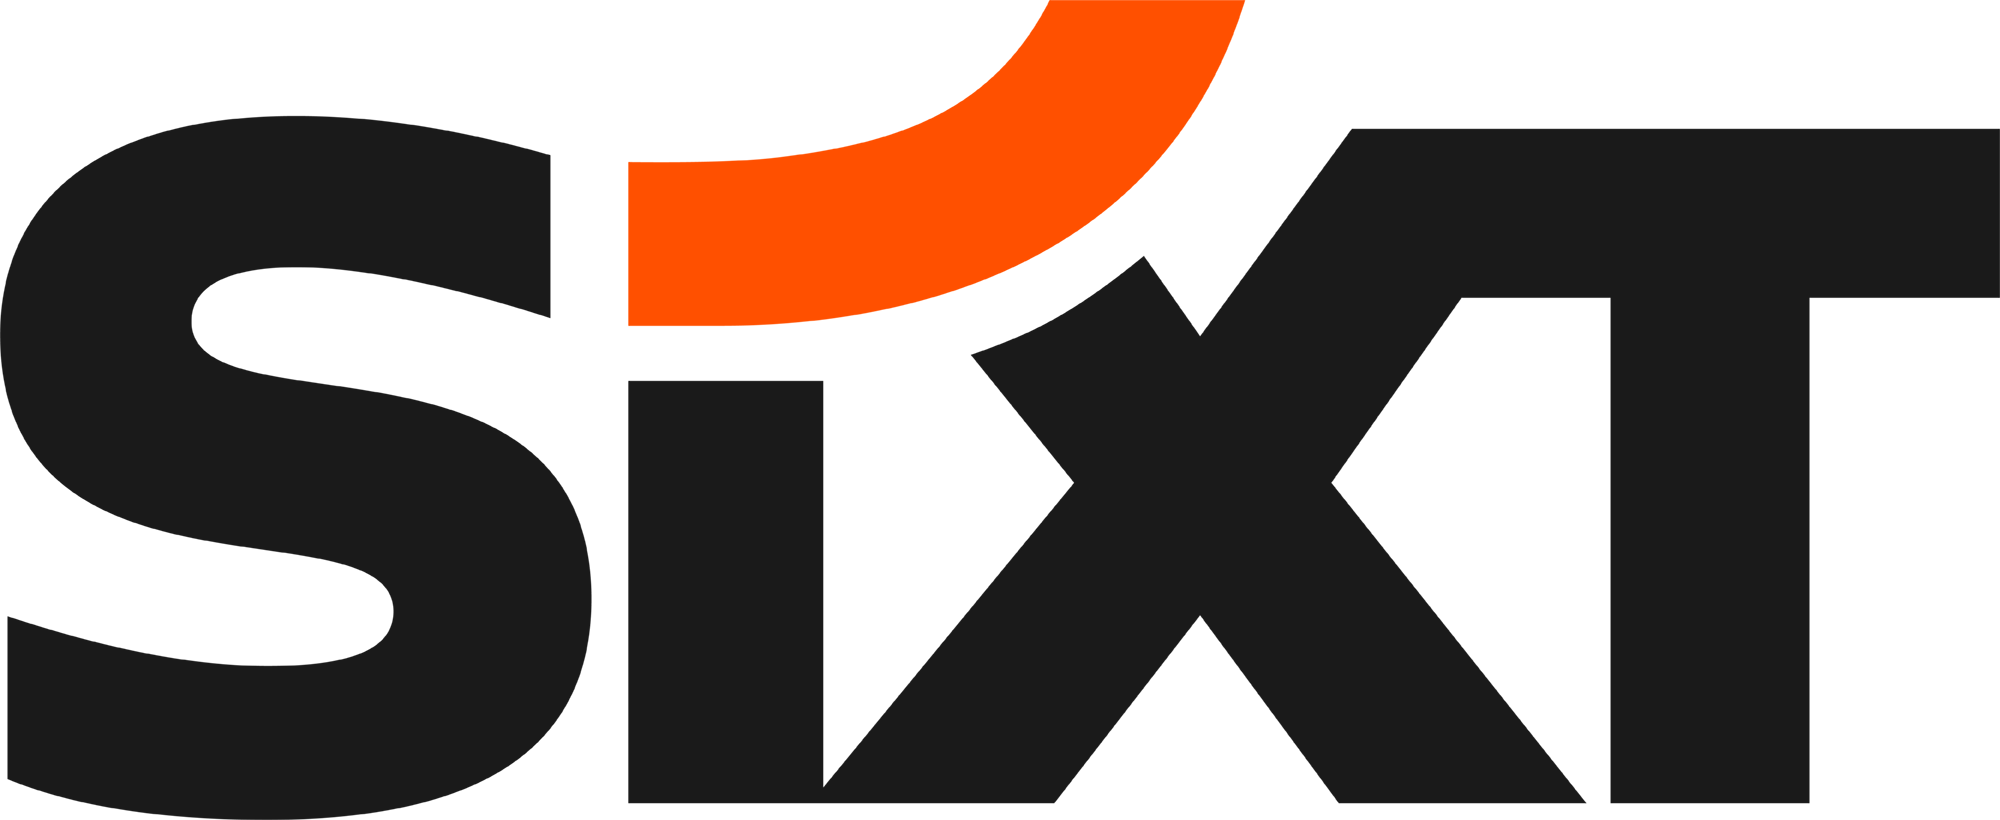 SIXT_Logo_Pos_RGB